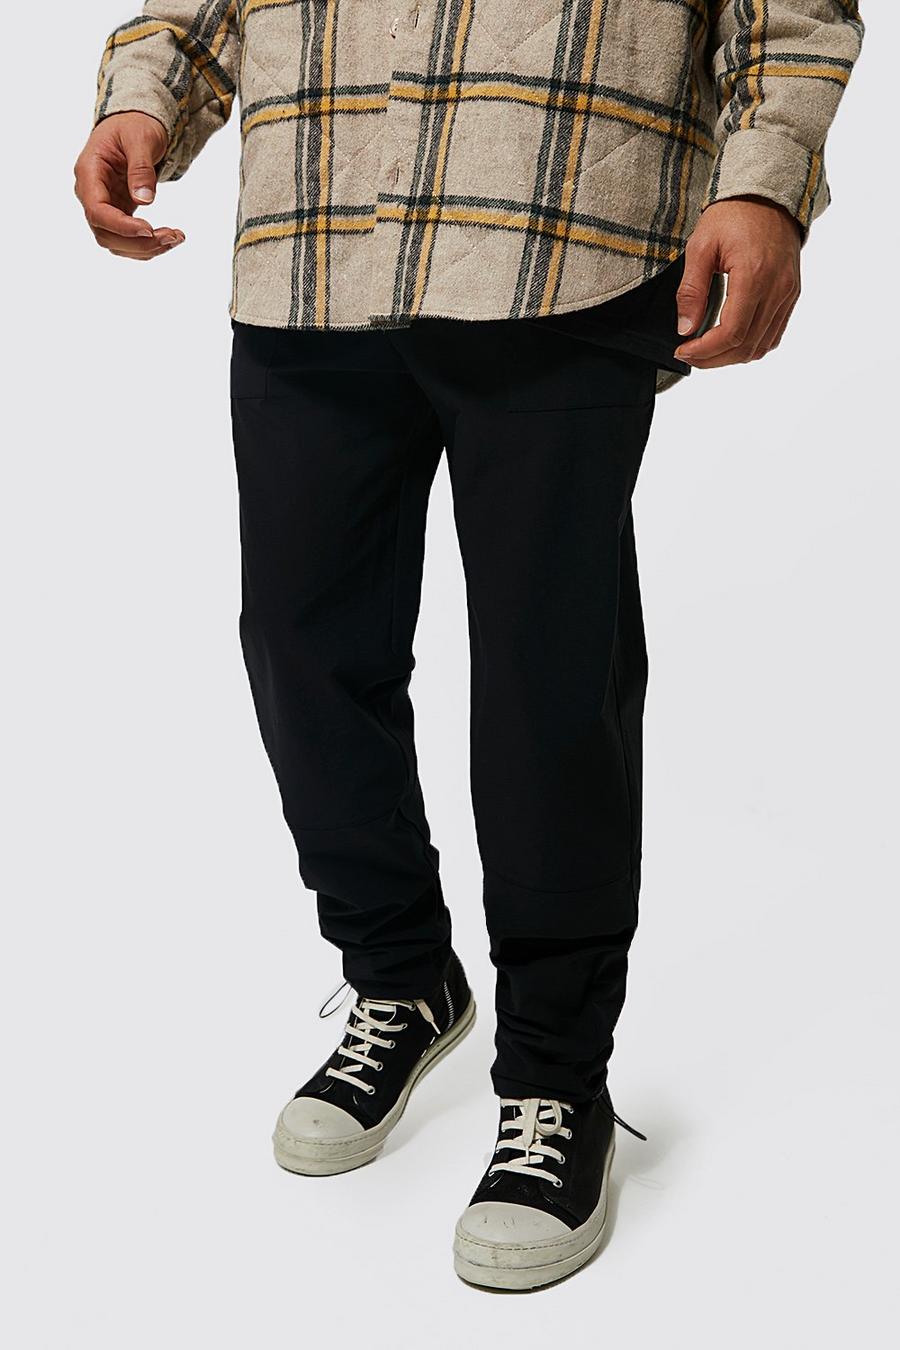 Pantalón Ofcl elástico técnico con paneles, Black negro image number 1